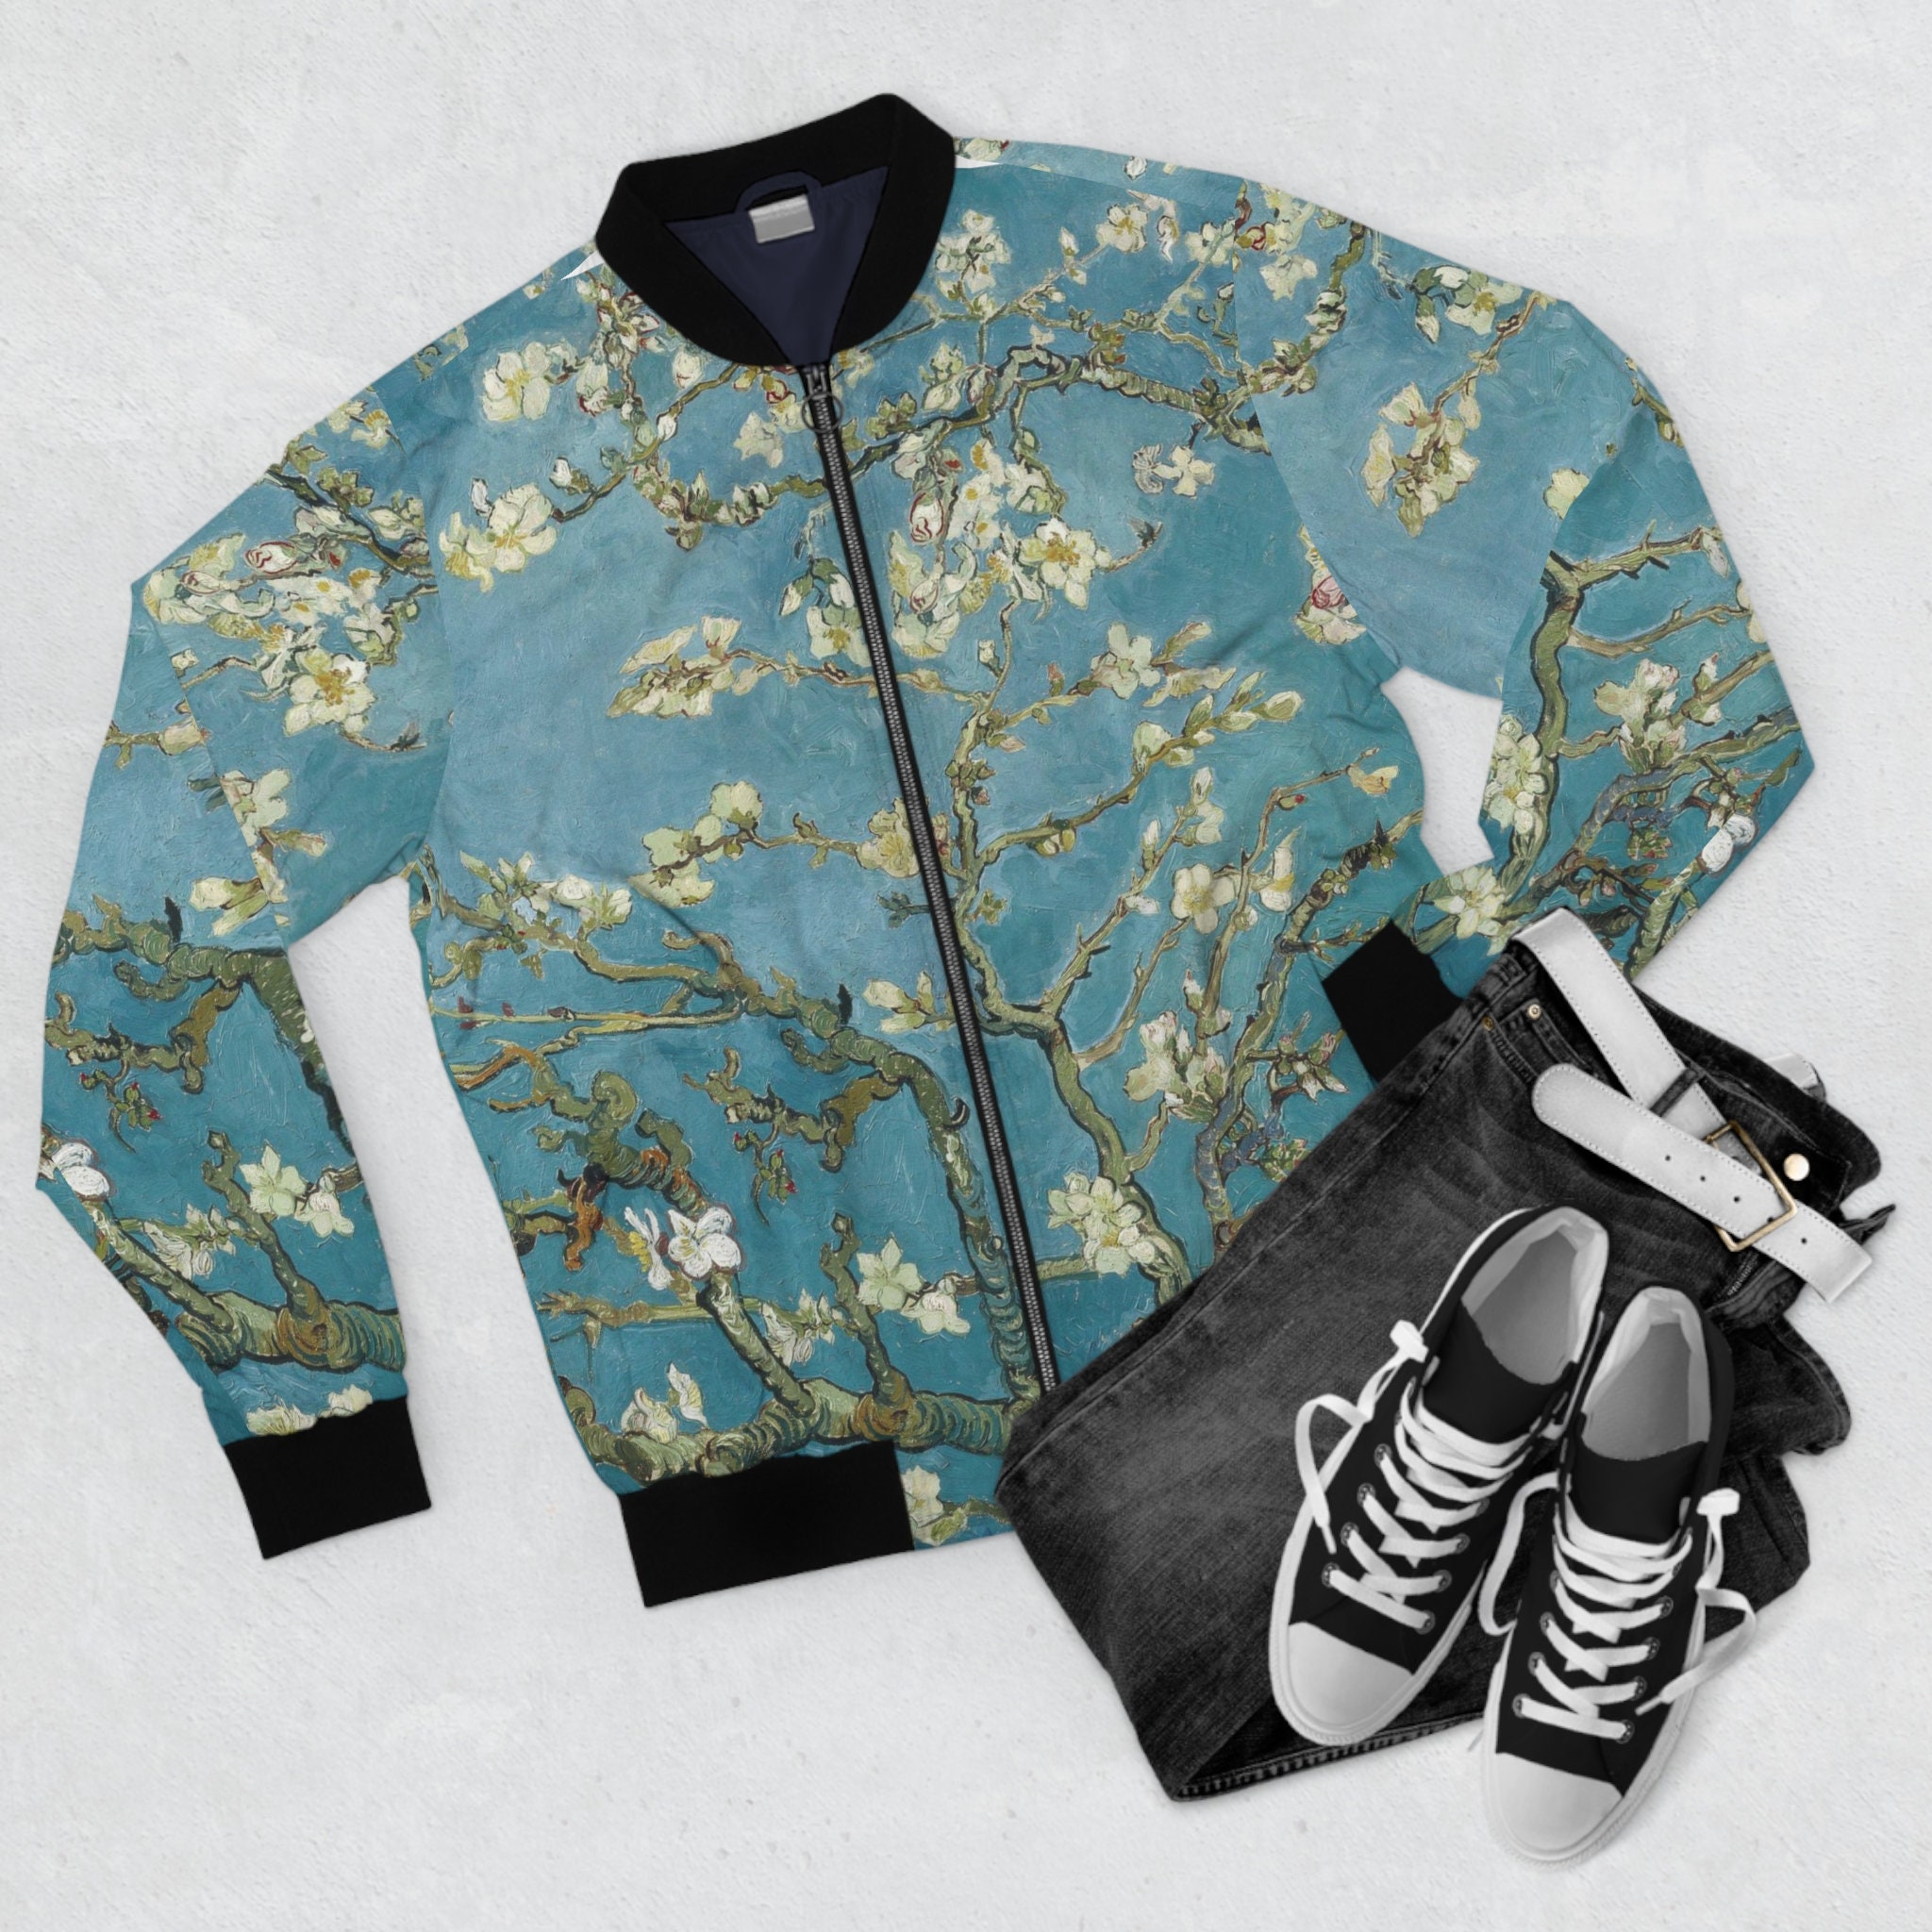 Van Gogh Almond Blossom Men's Bomber Jacket